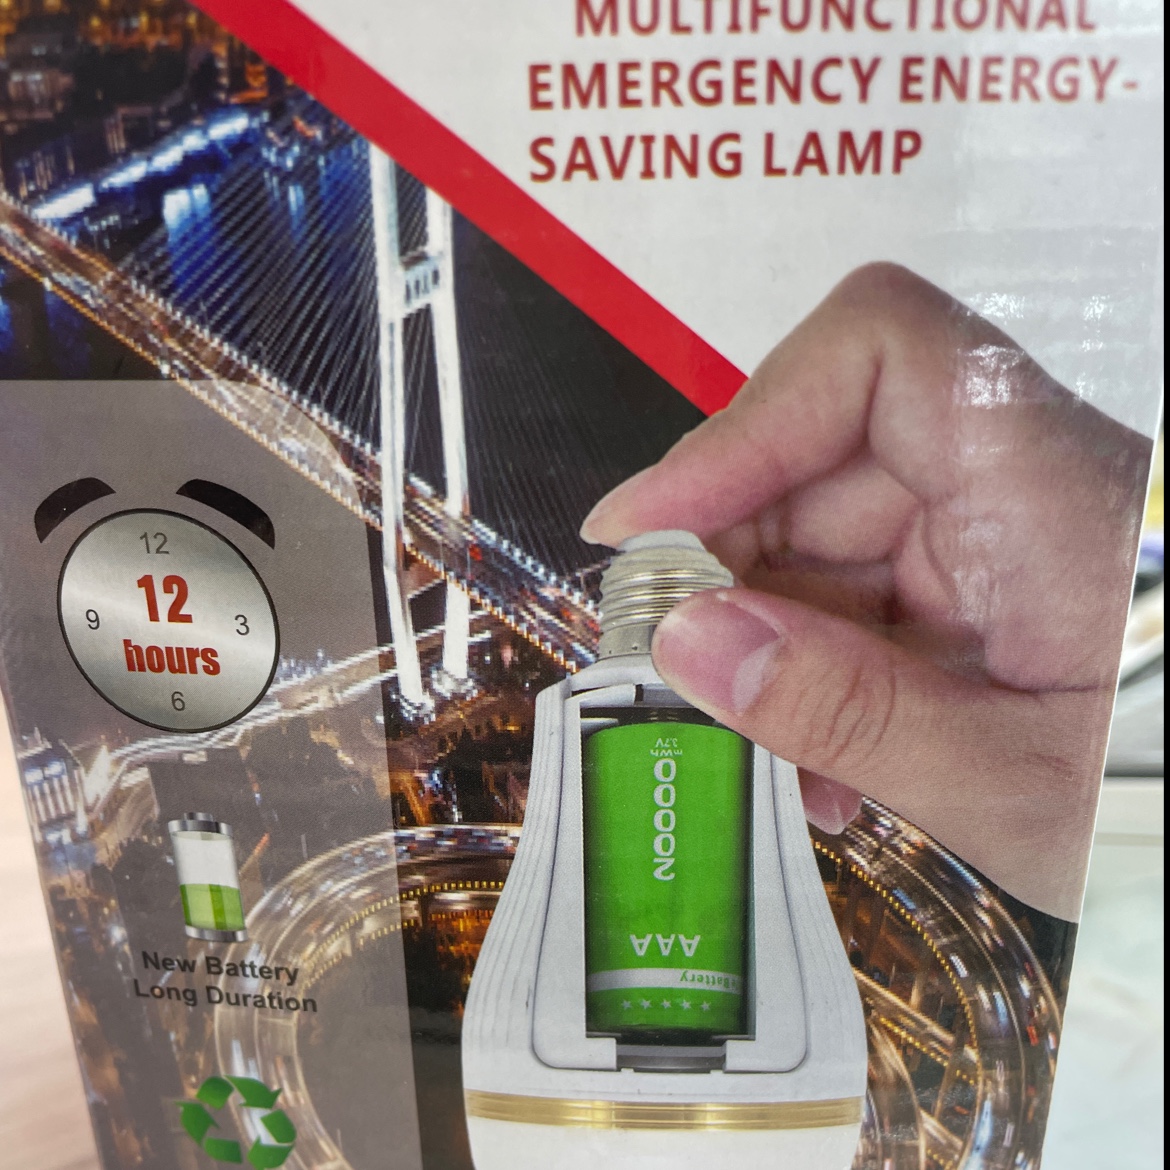 New emergency Lamp1
详情图1